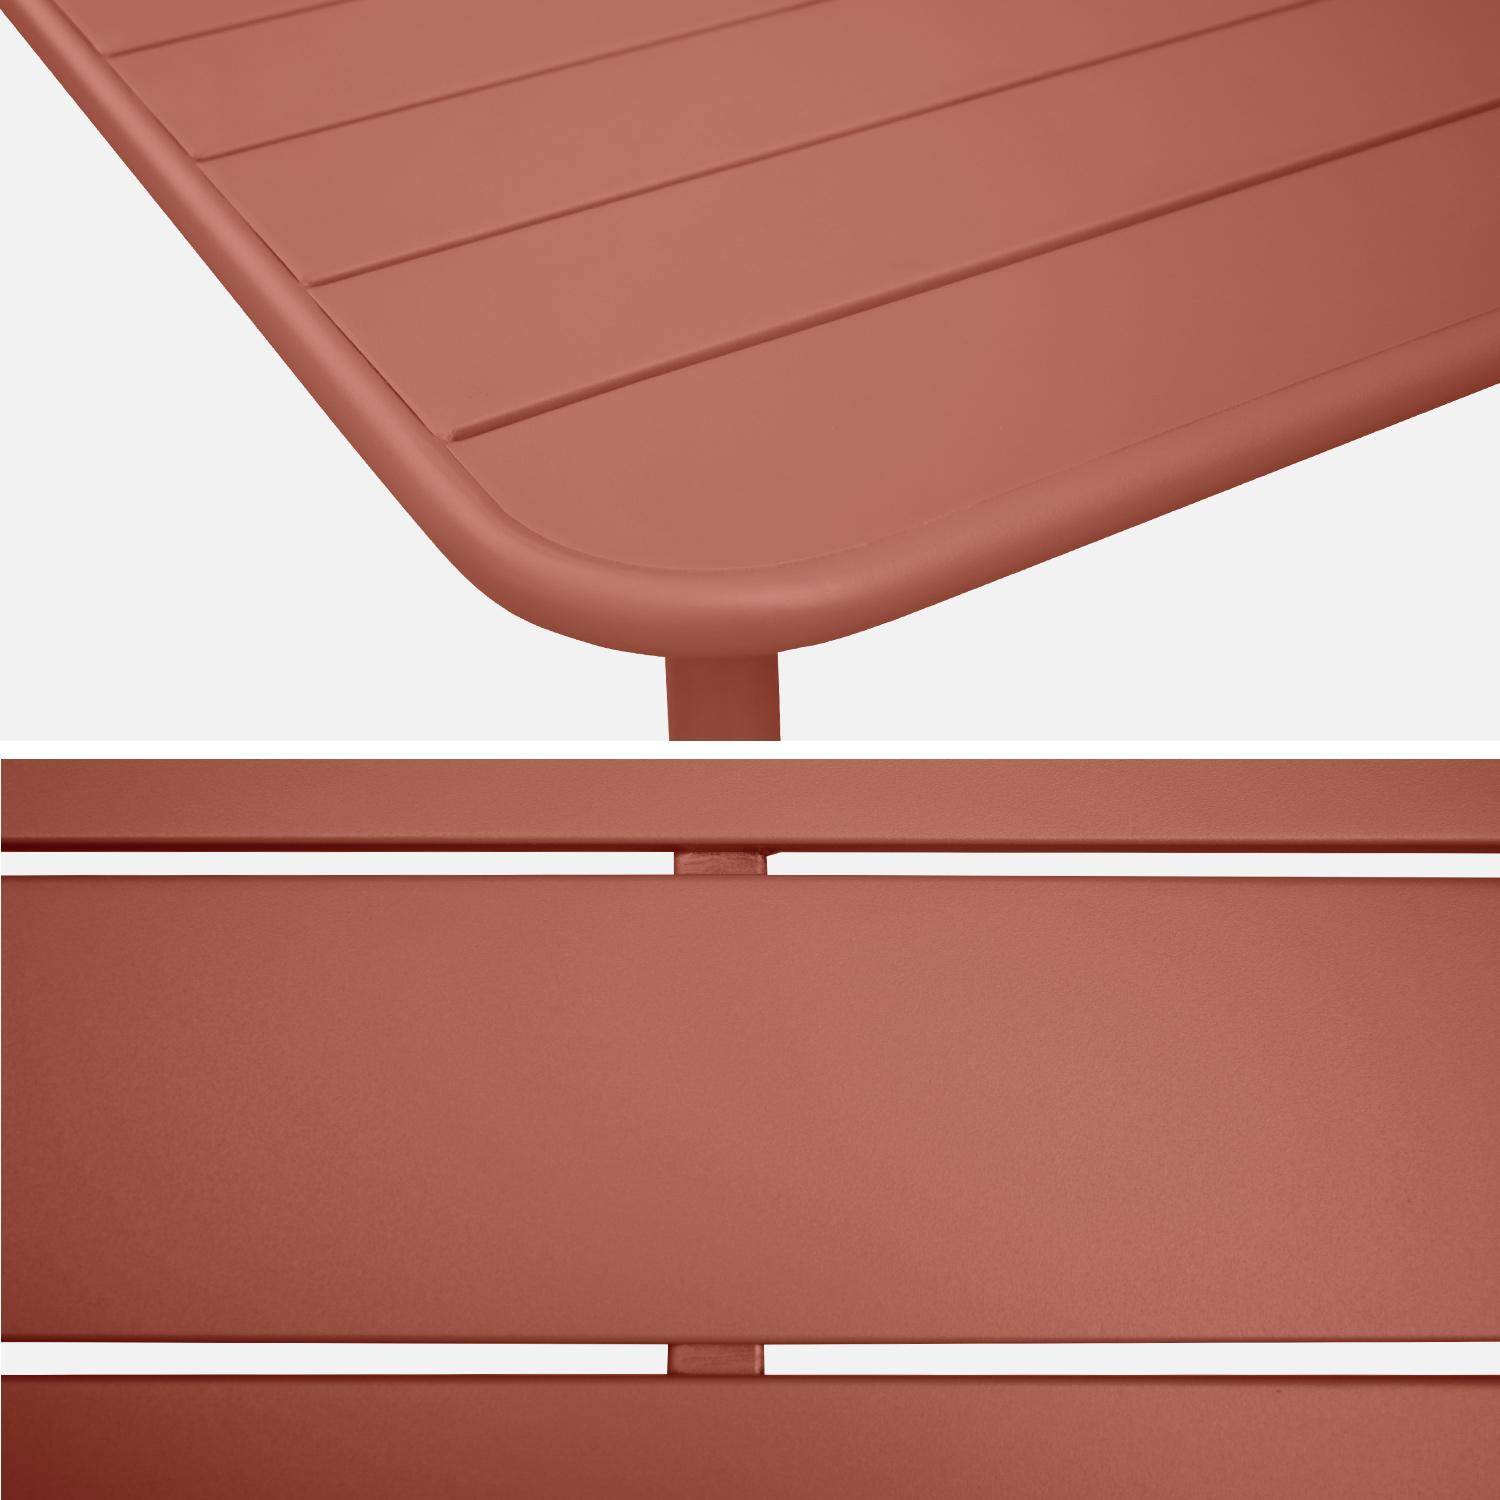 4-seater rectangular steel garden table, 120x70cm - Amelia - Terracotta Photo6